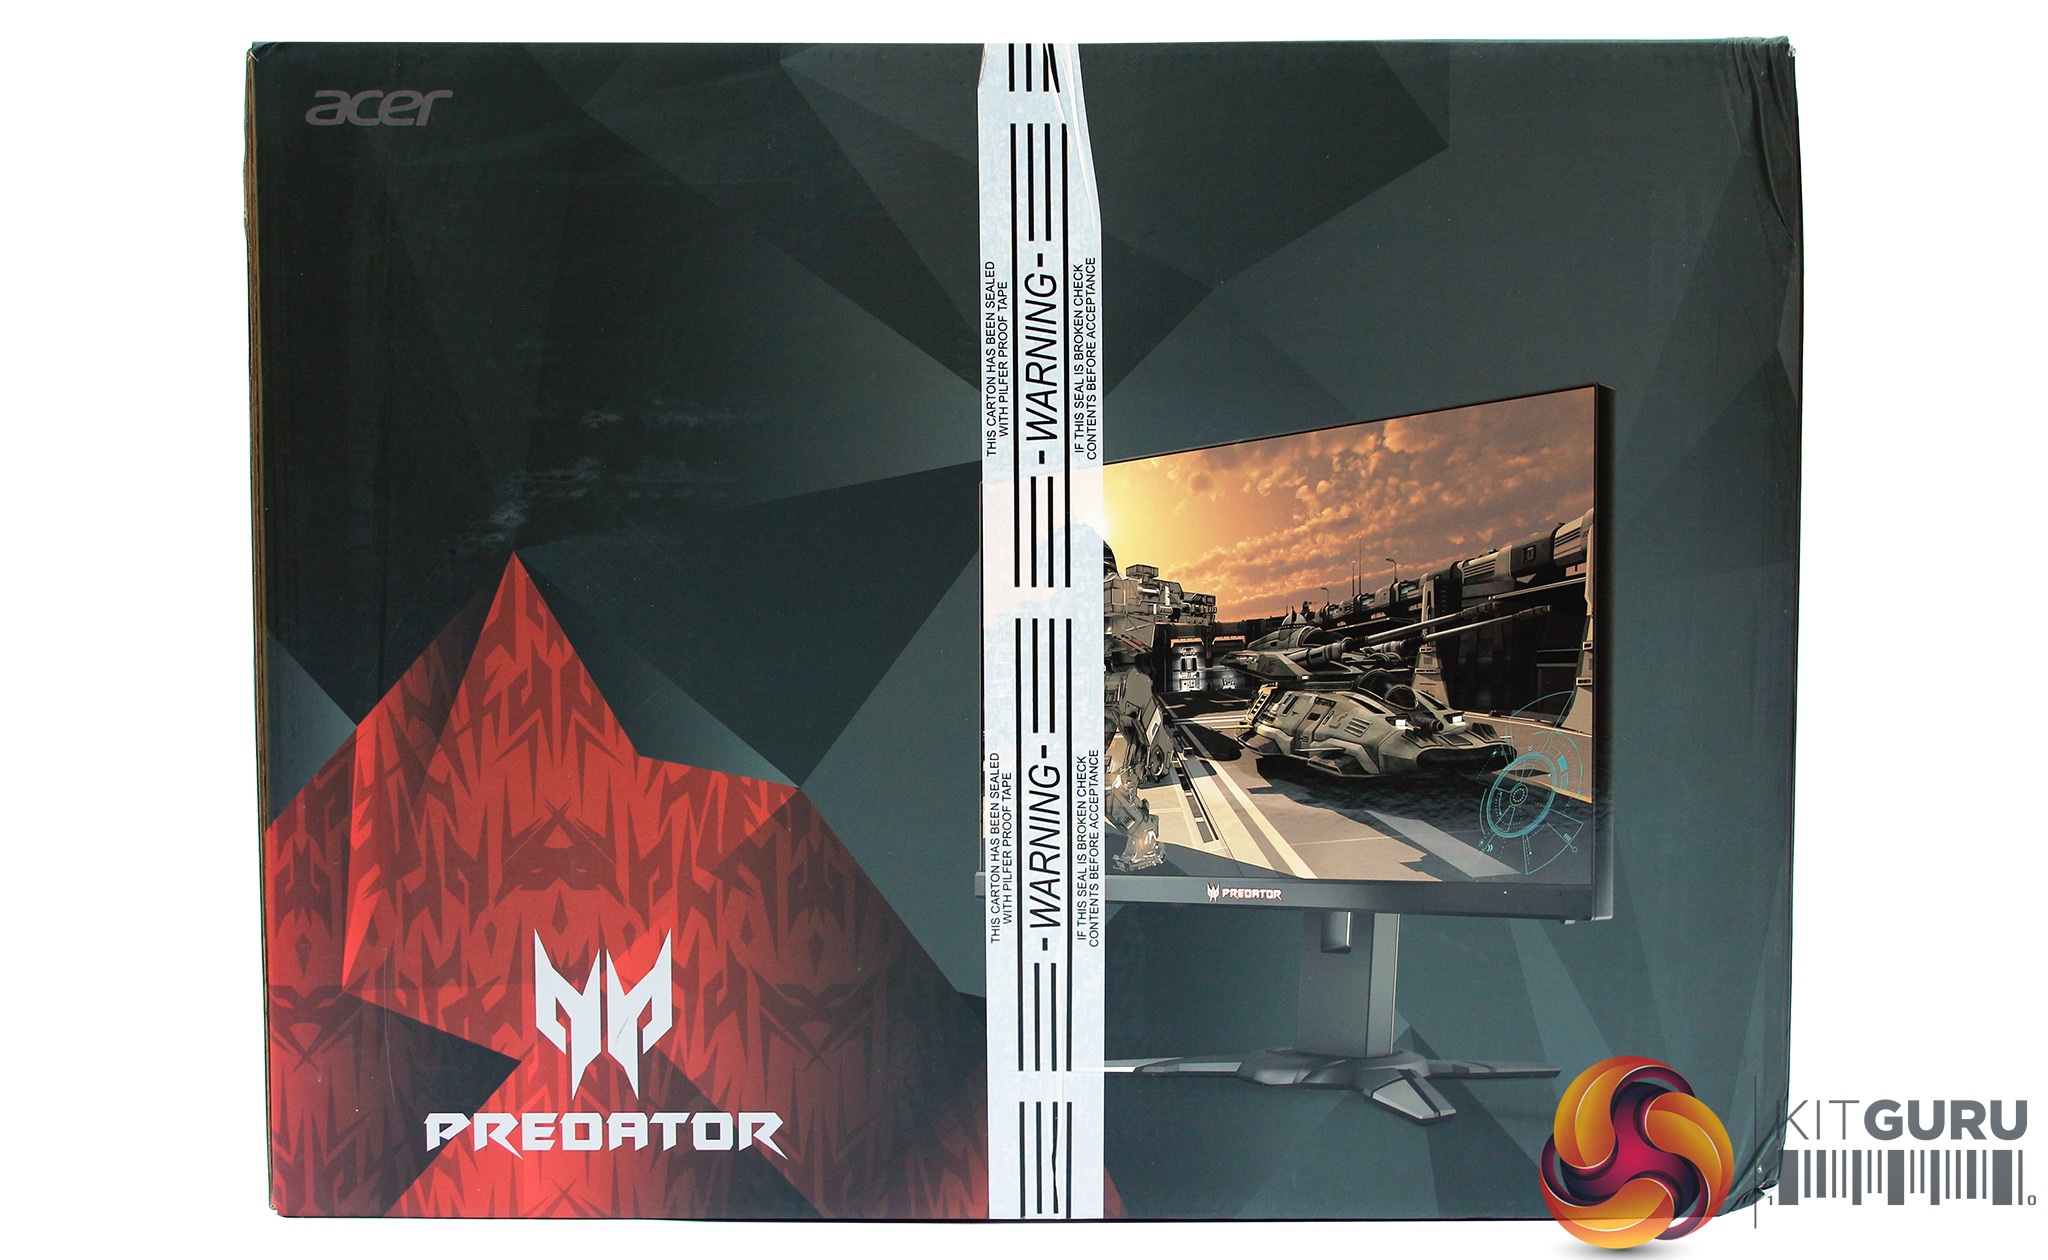 Acer Predator Xb252q 240hz G Sync Monitor Review Kitguru Part 2